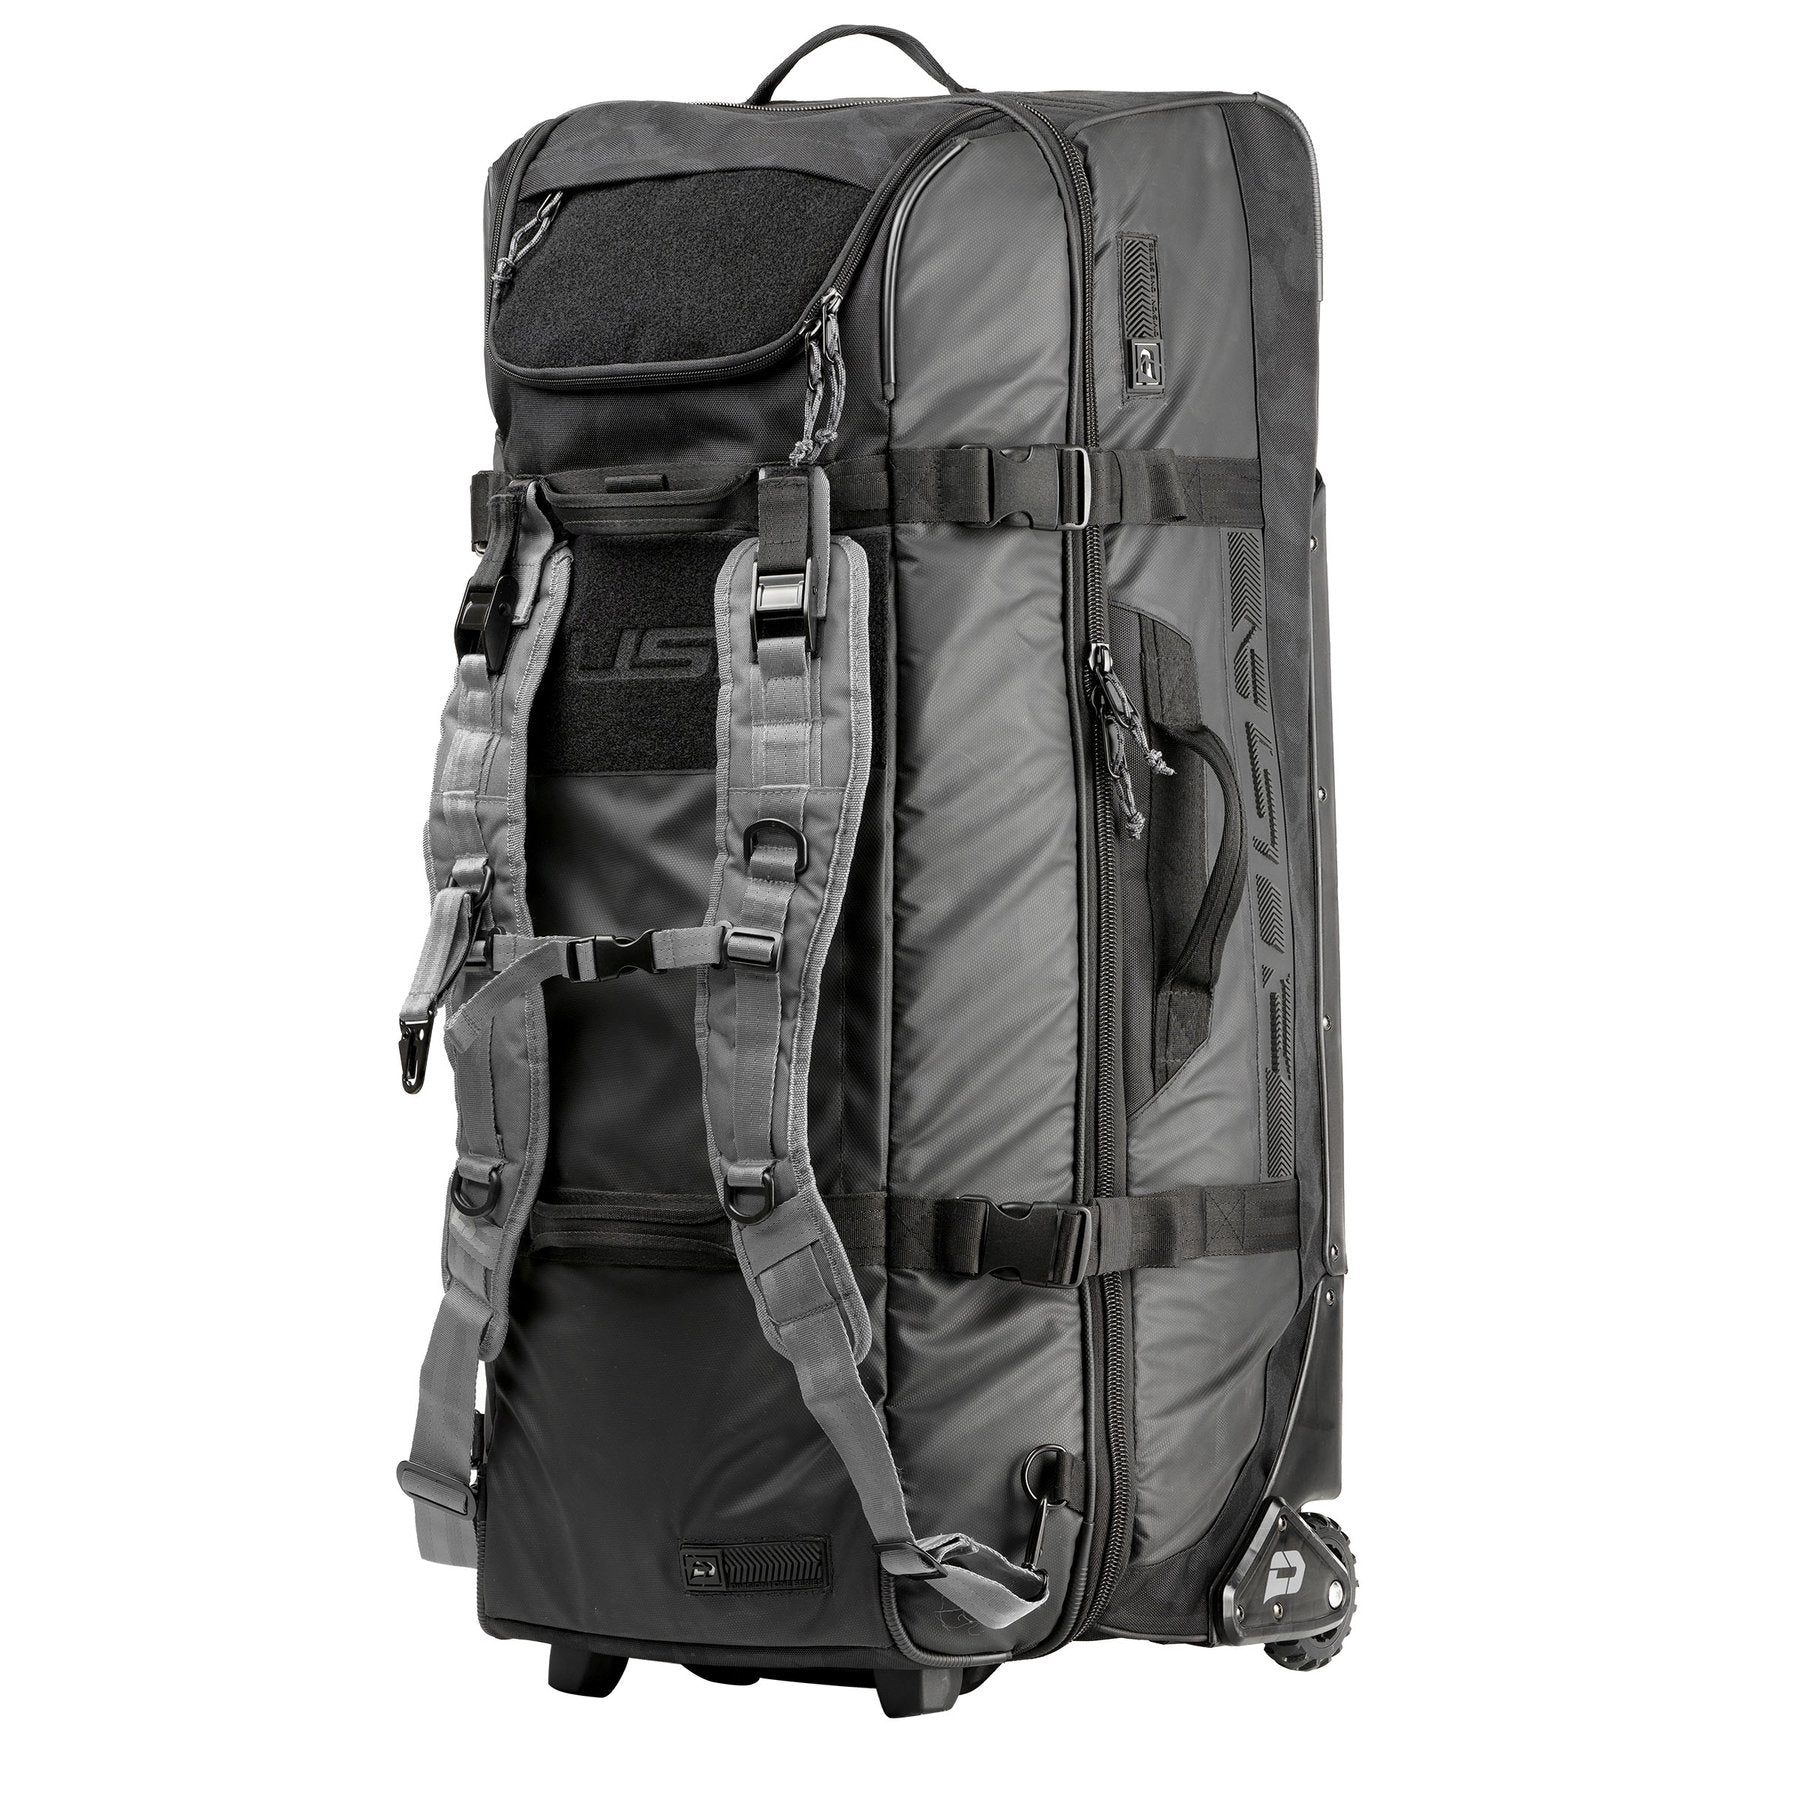 Push Division One Large Roller Gear Bag - Black - Tan Backpack Strap Kit